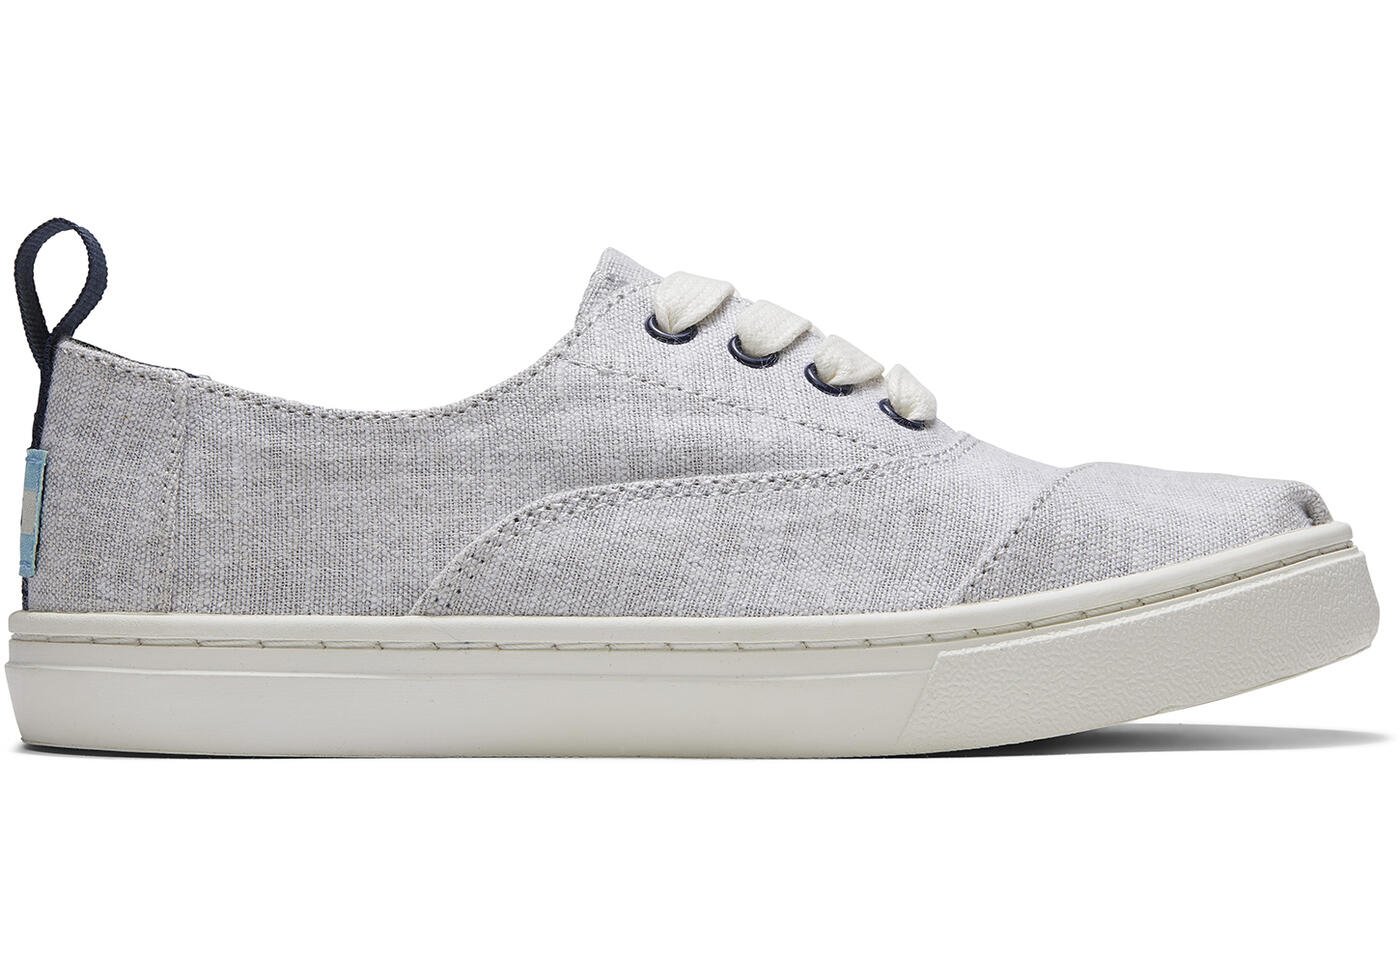 13. Youth Grey Cordones Sneaker - Toms